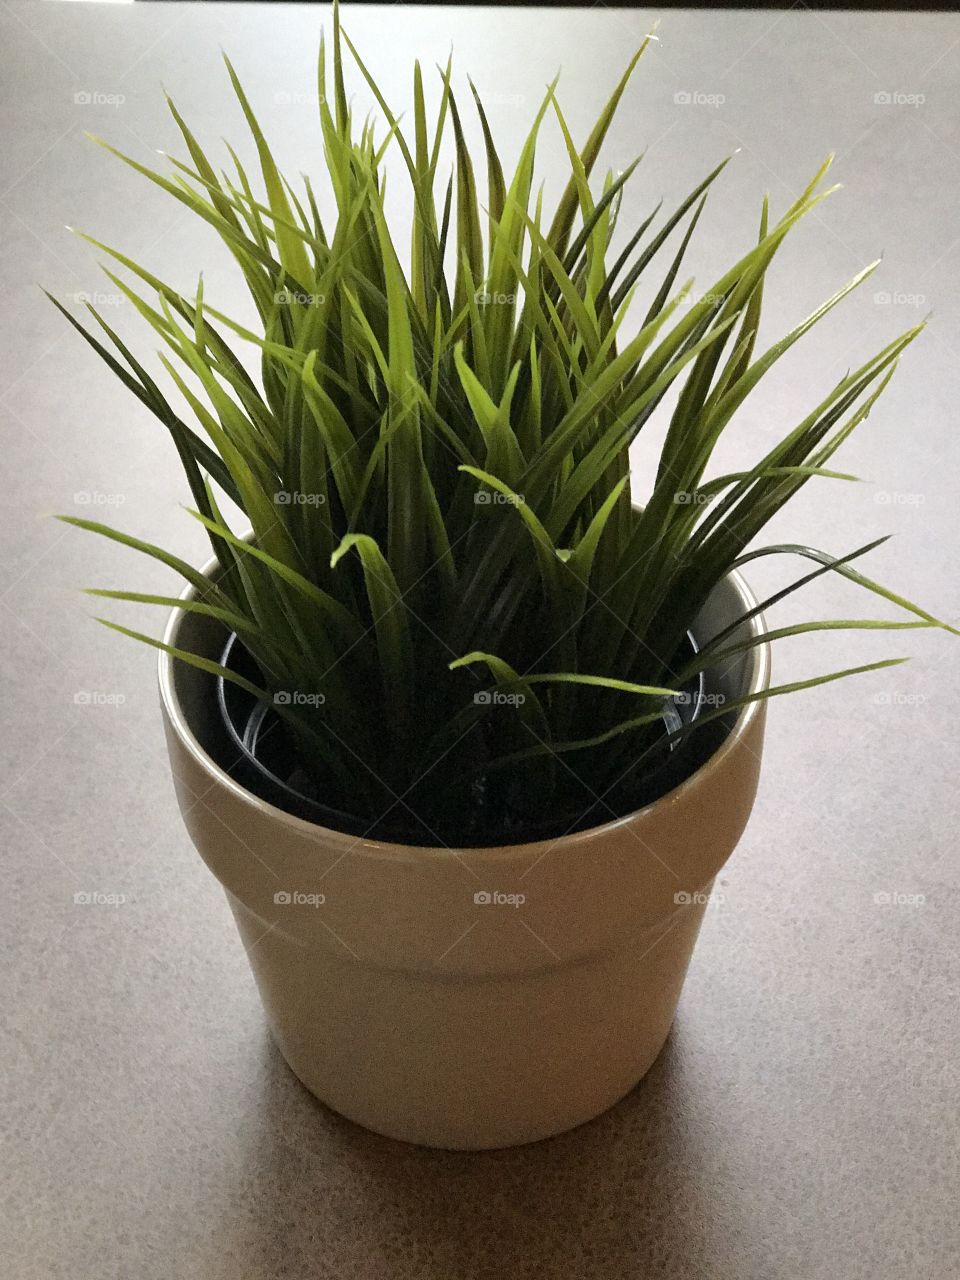 Minimalistic house plant